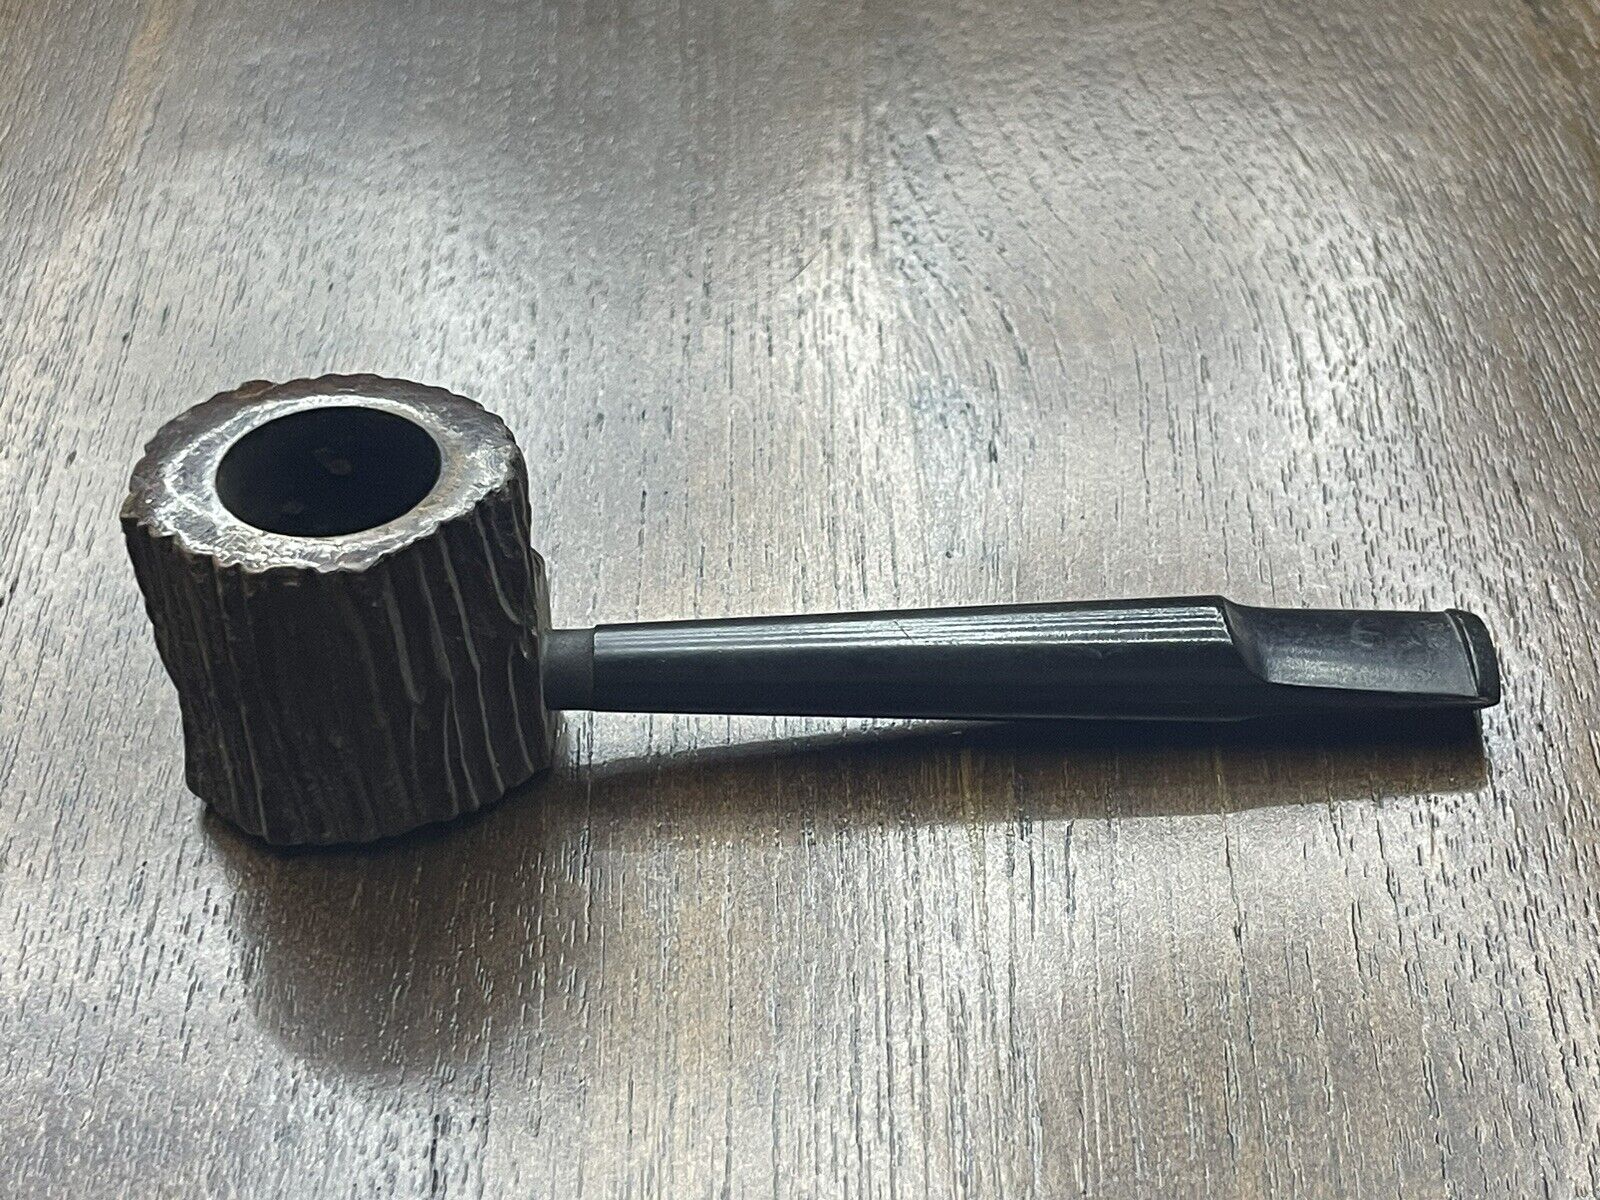 Vintage Imported Briar Smoking Pipe - 5”